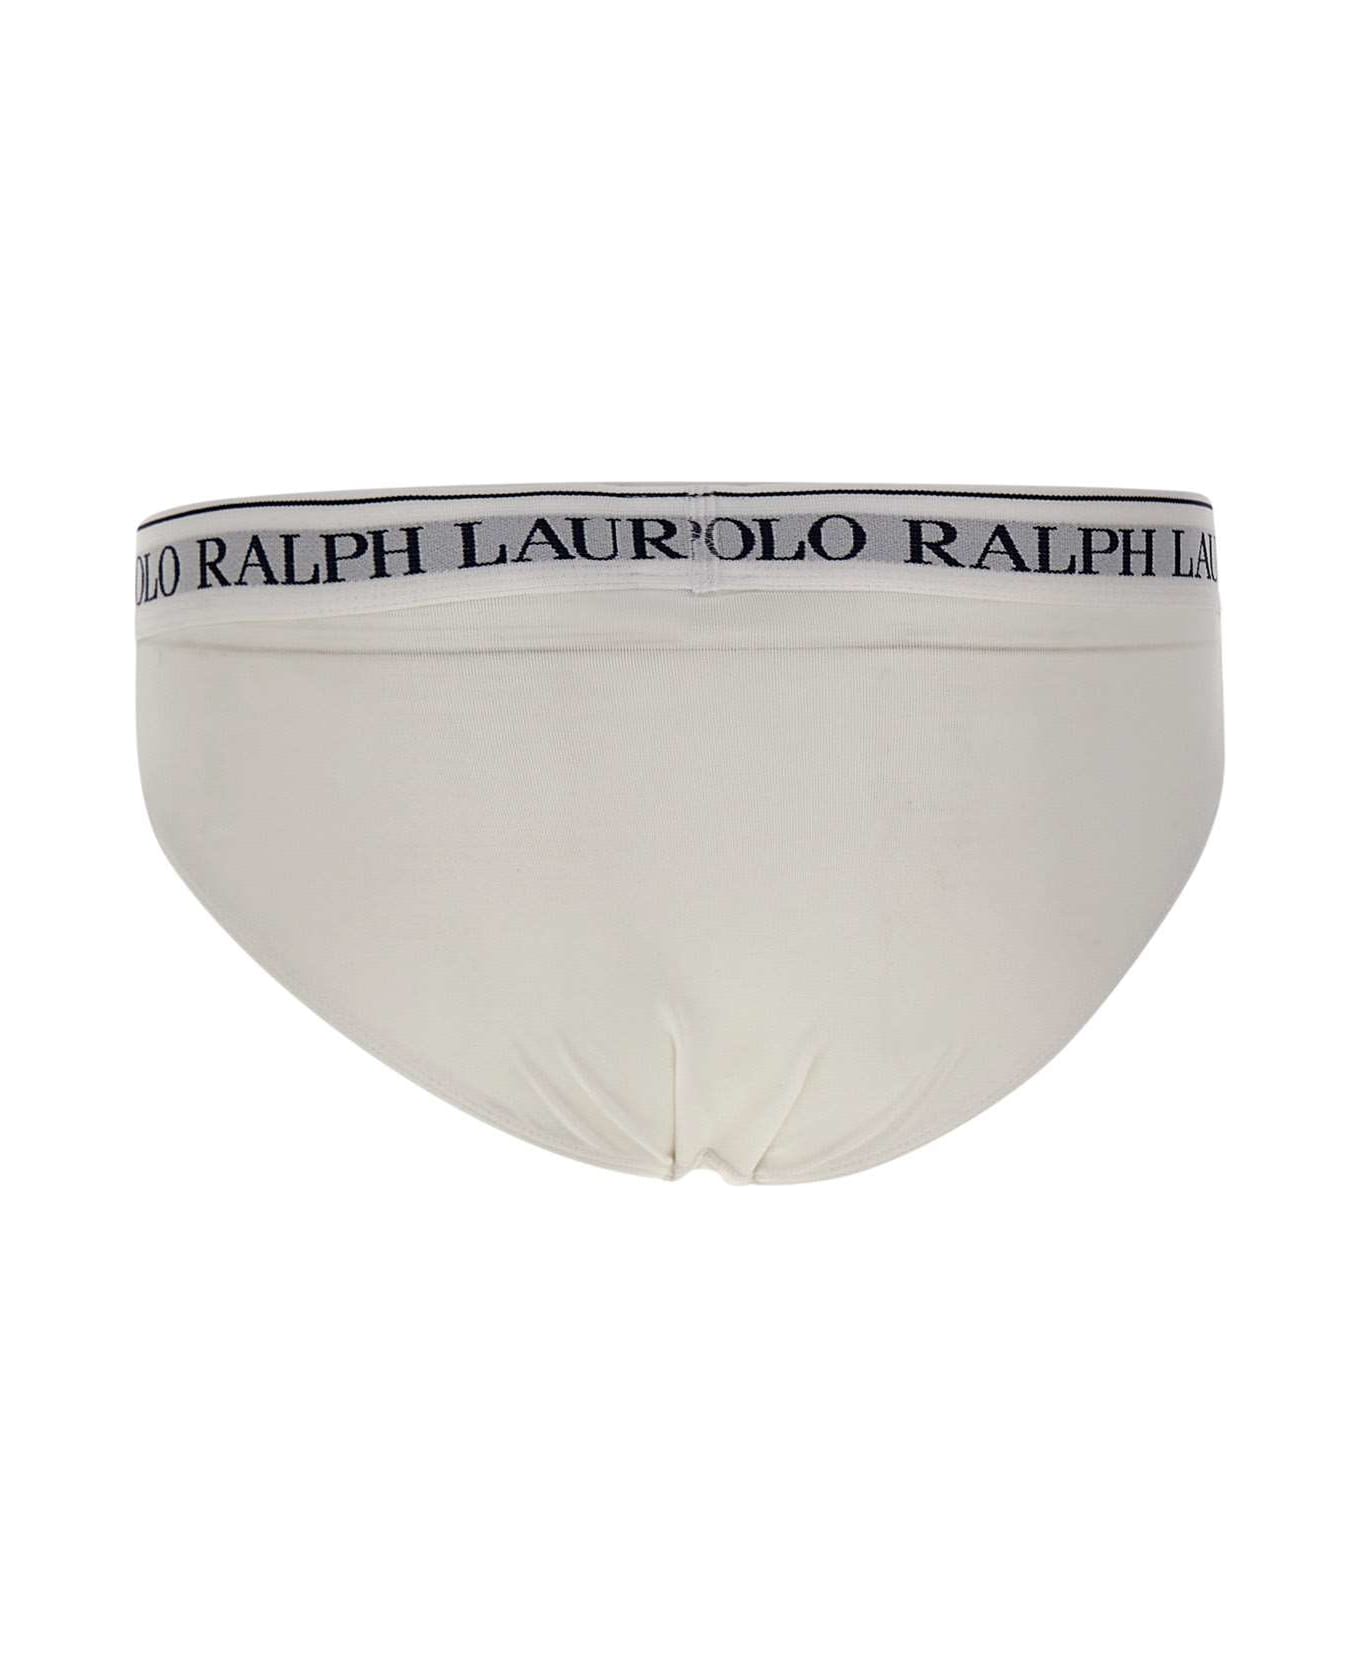 Polo Ralph Lauren 'core Replen' Tripack Briefs - WHITE